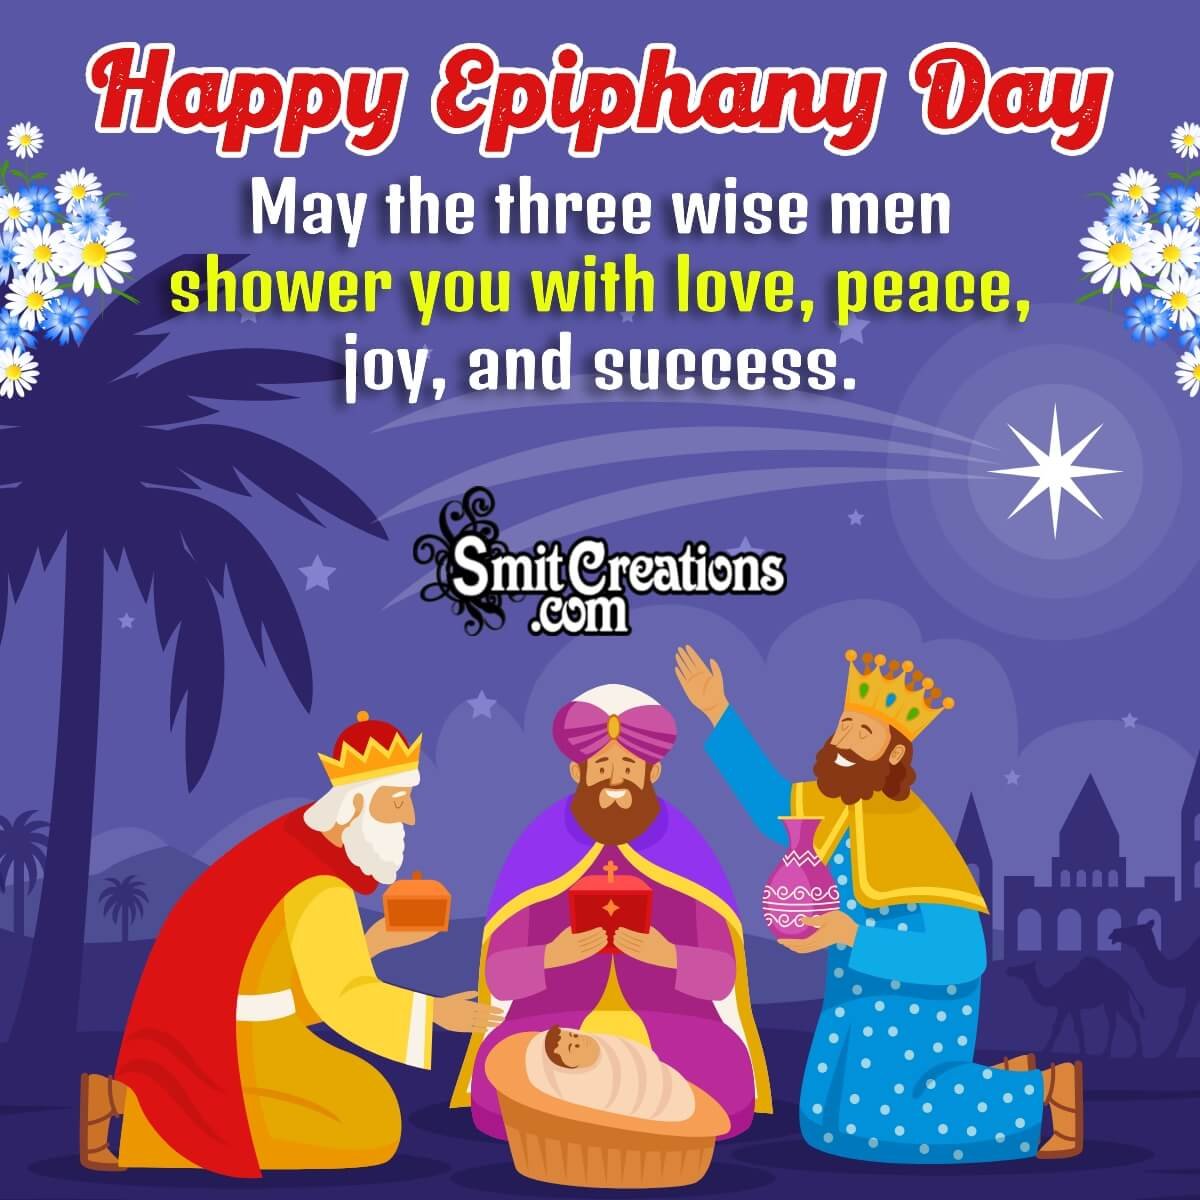 Happy Epiphany Day Wishes